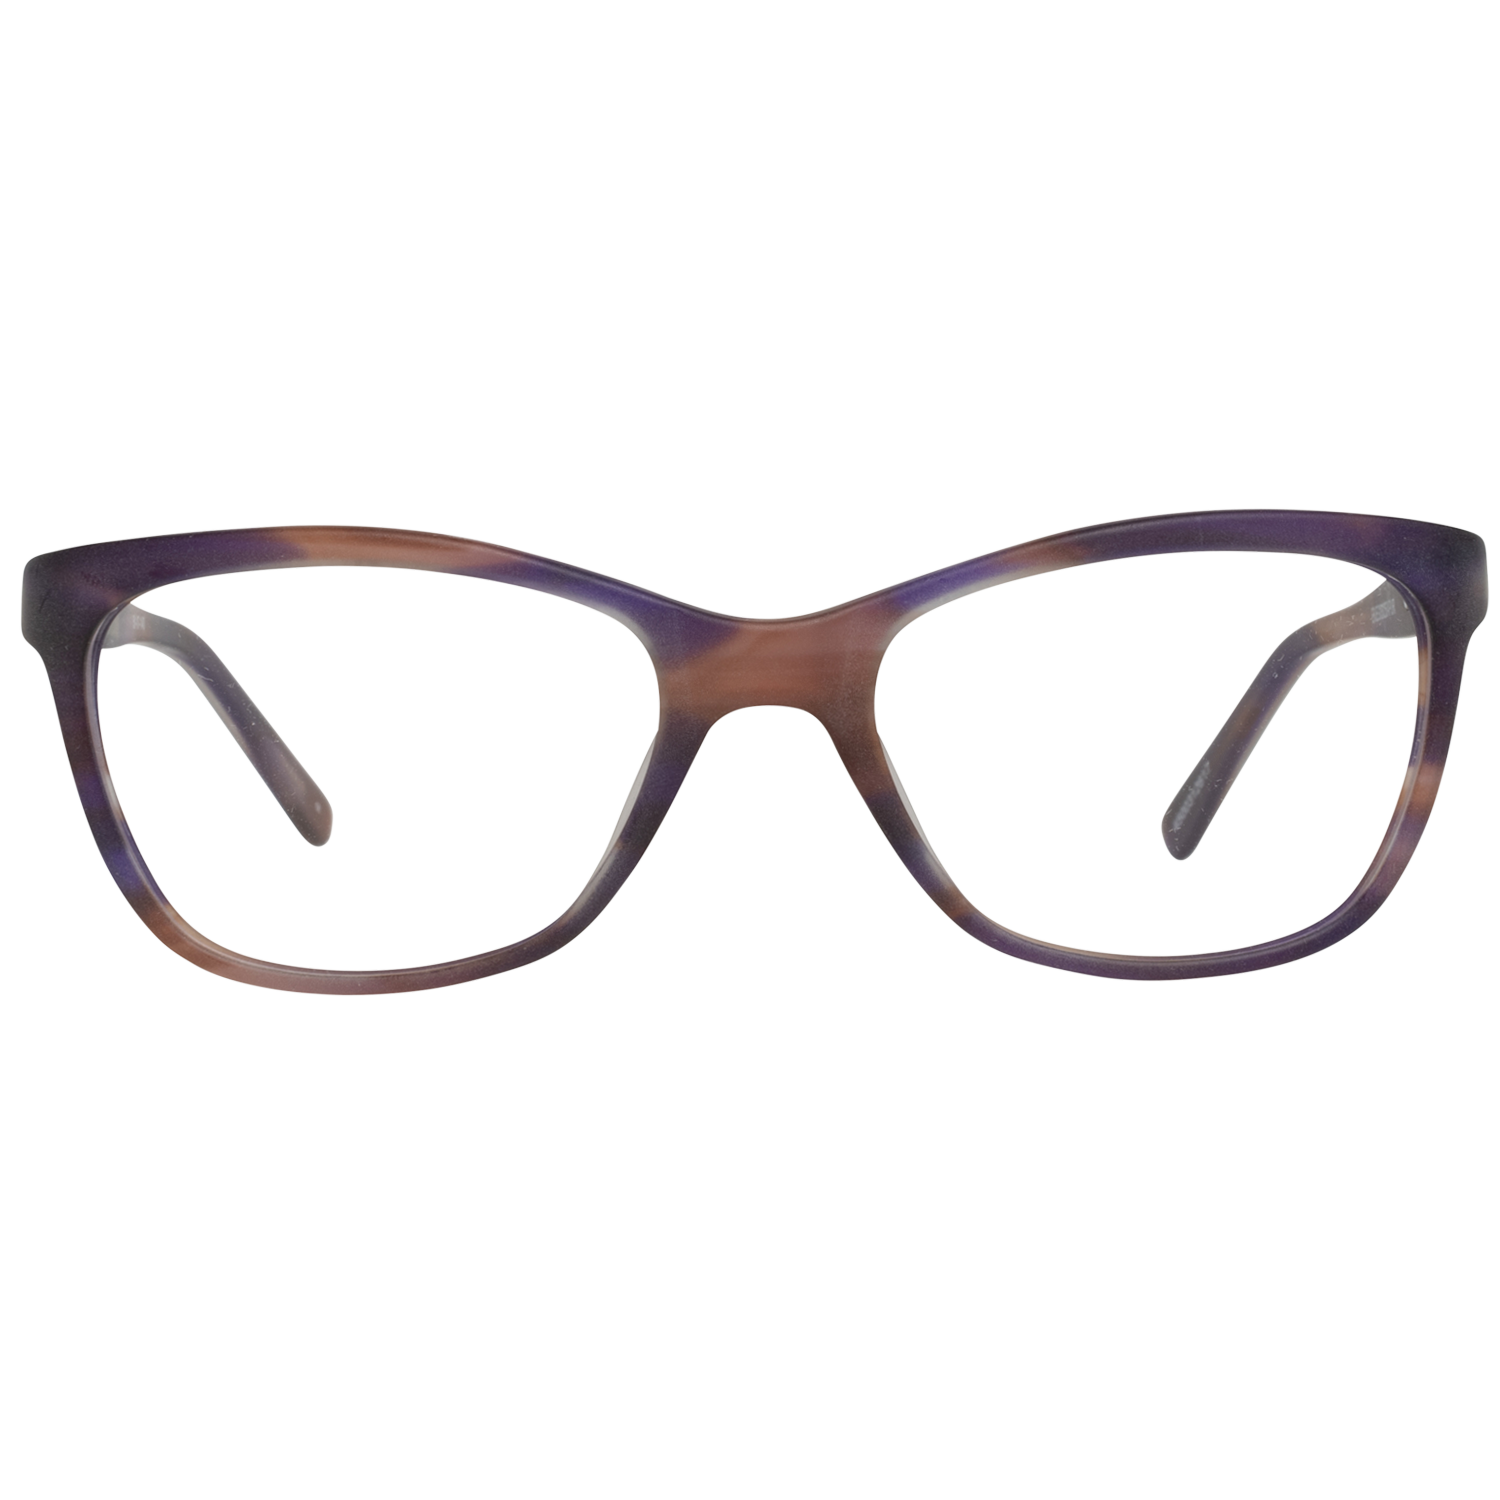 Roxy Frames Roxy Glasses Optical Frame ERJEG03025 APUR 51 Eyeglasses Eyewear UK USA Australia 